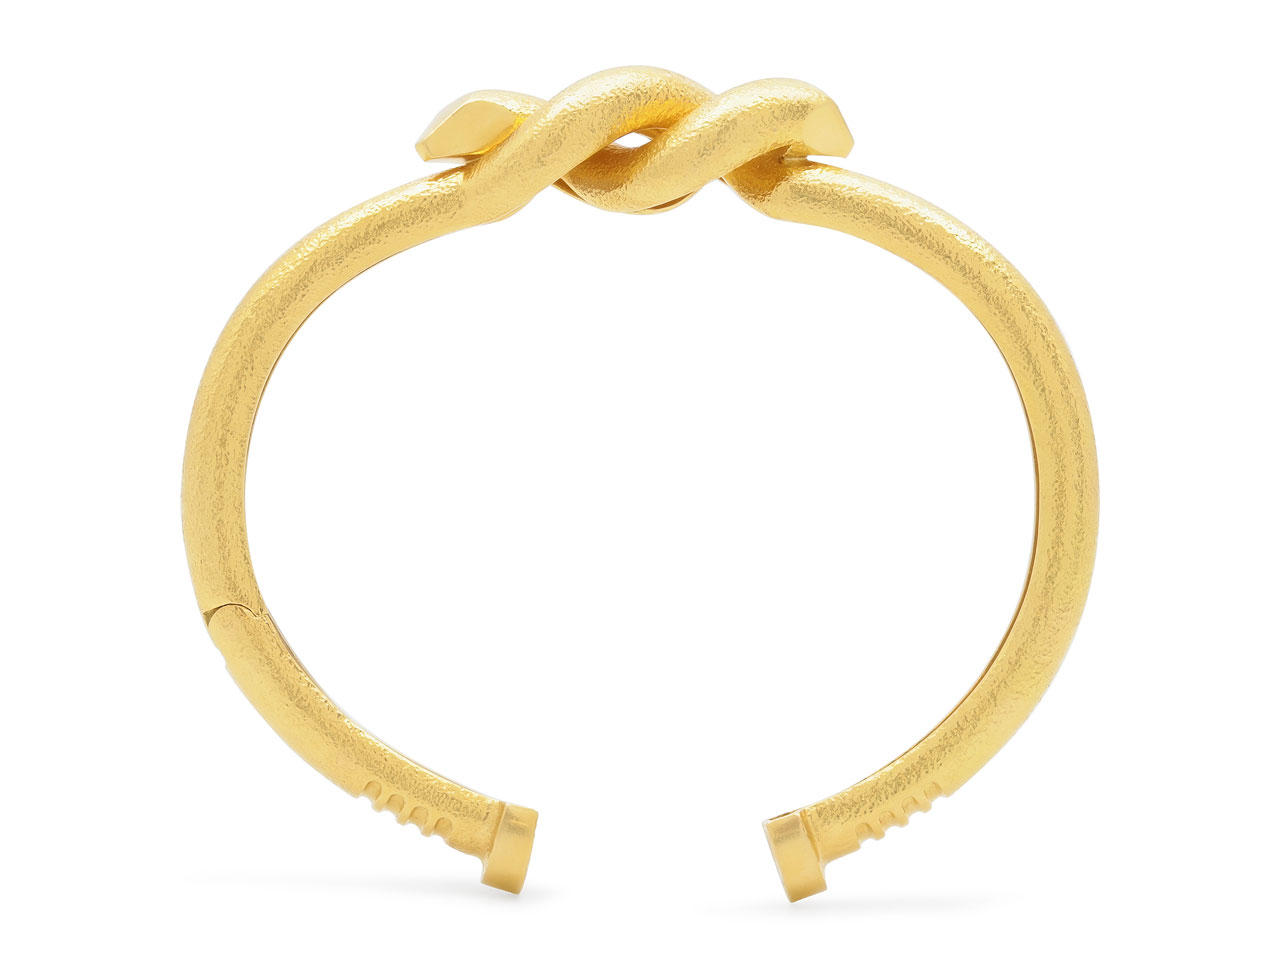 David Webb 'Twisted Nail' Cuff Bracelet in 18K Gold